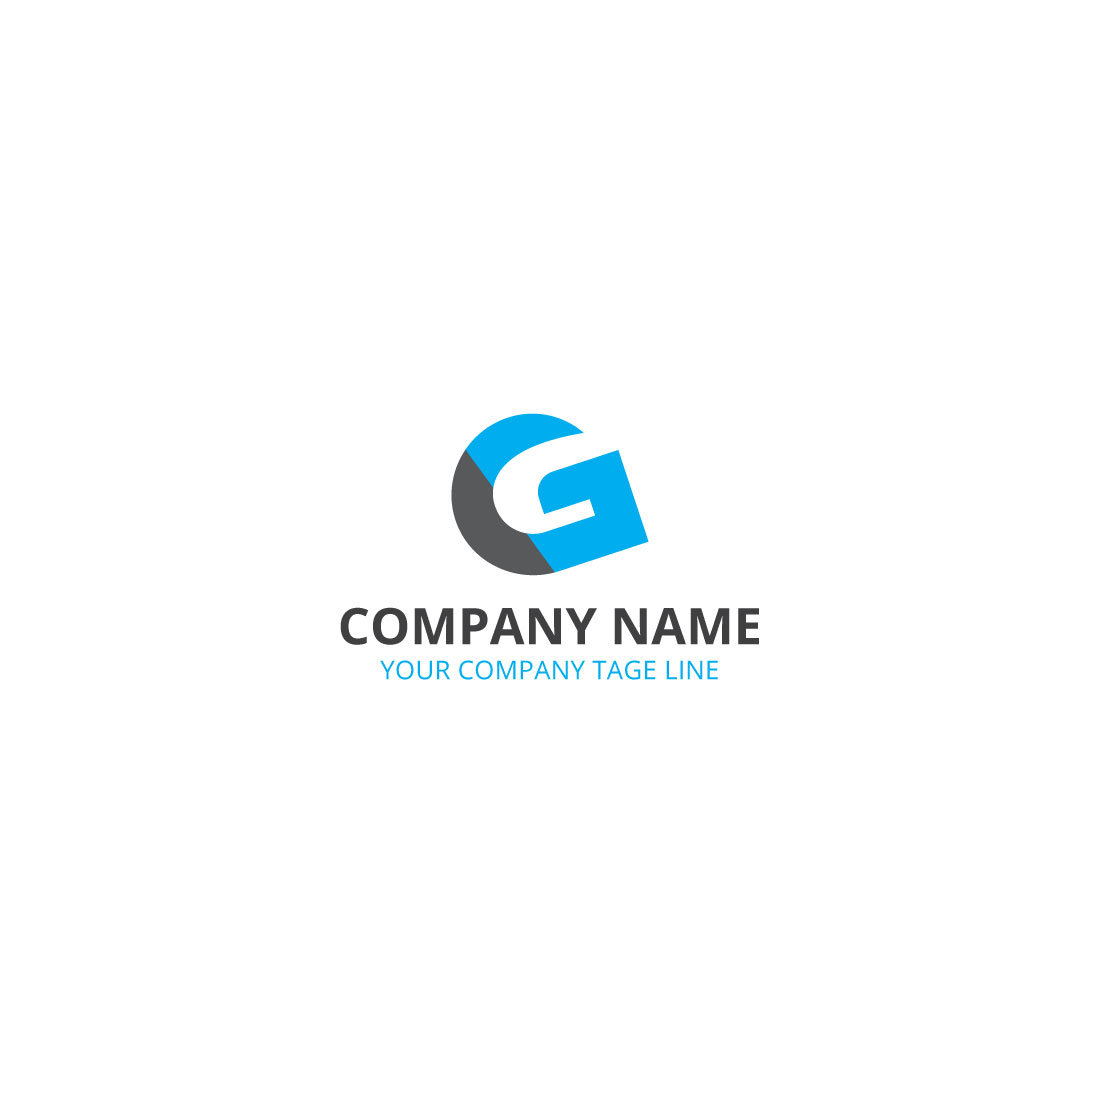 G Letter Logo Design cover image.